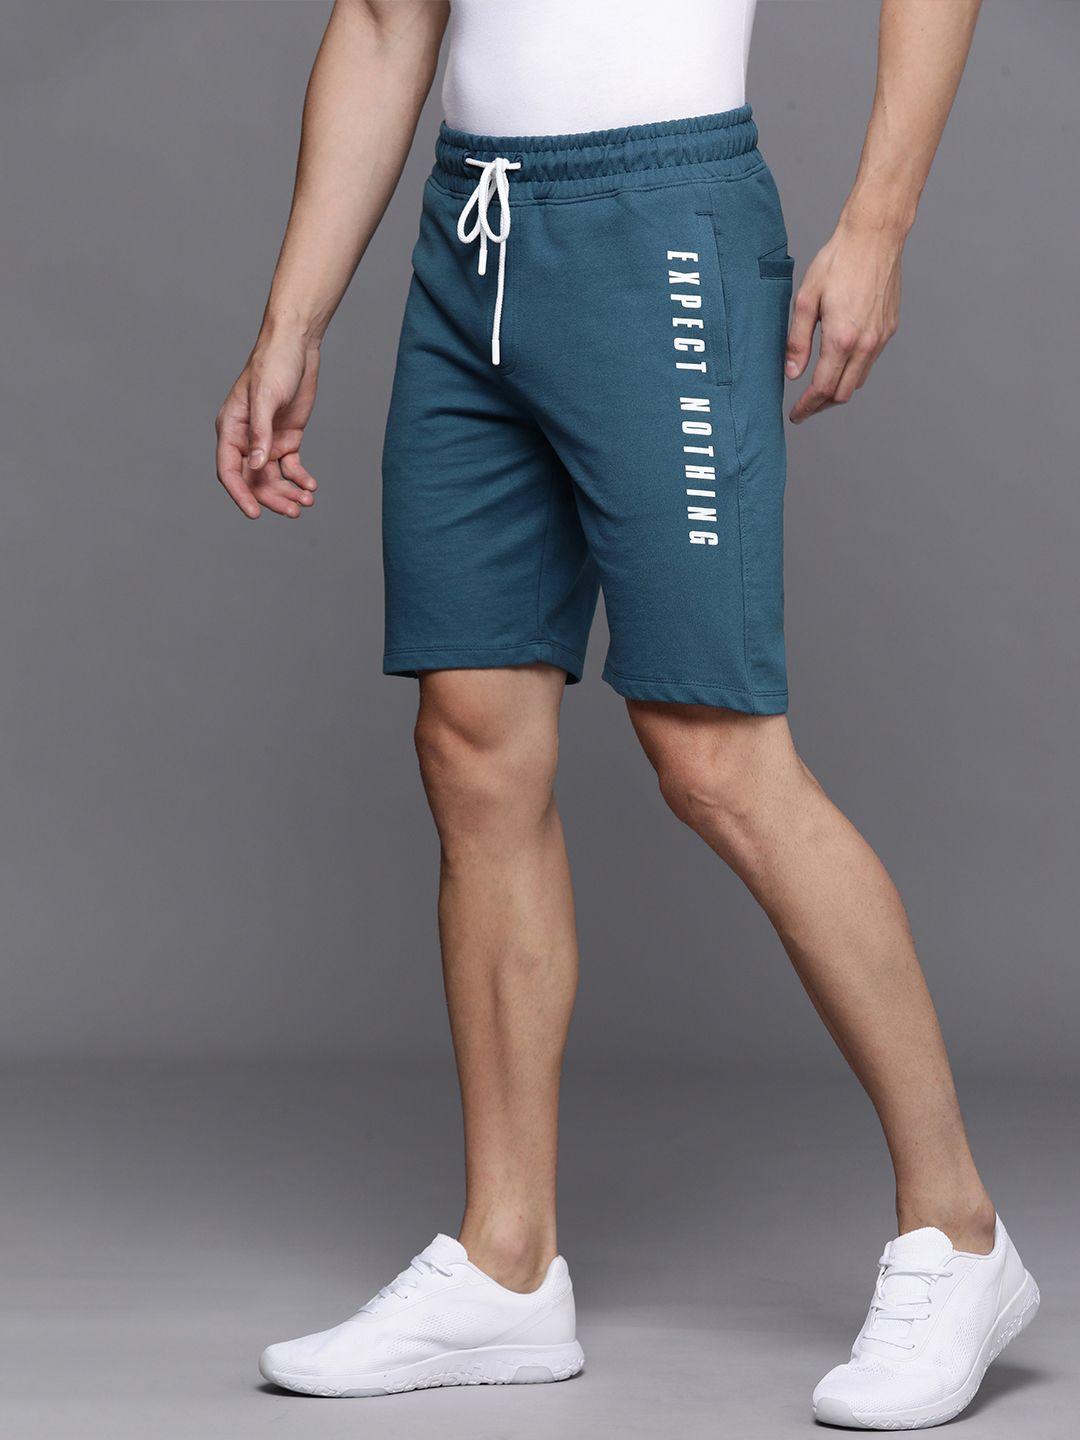 wrogn-men-teal-blue-typography-printed-mid-rise-regular-shorts